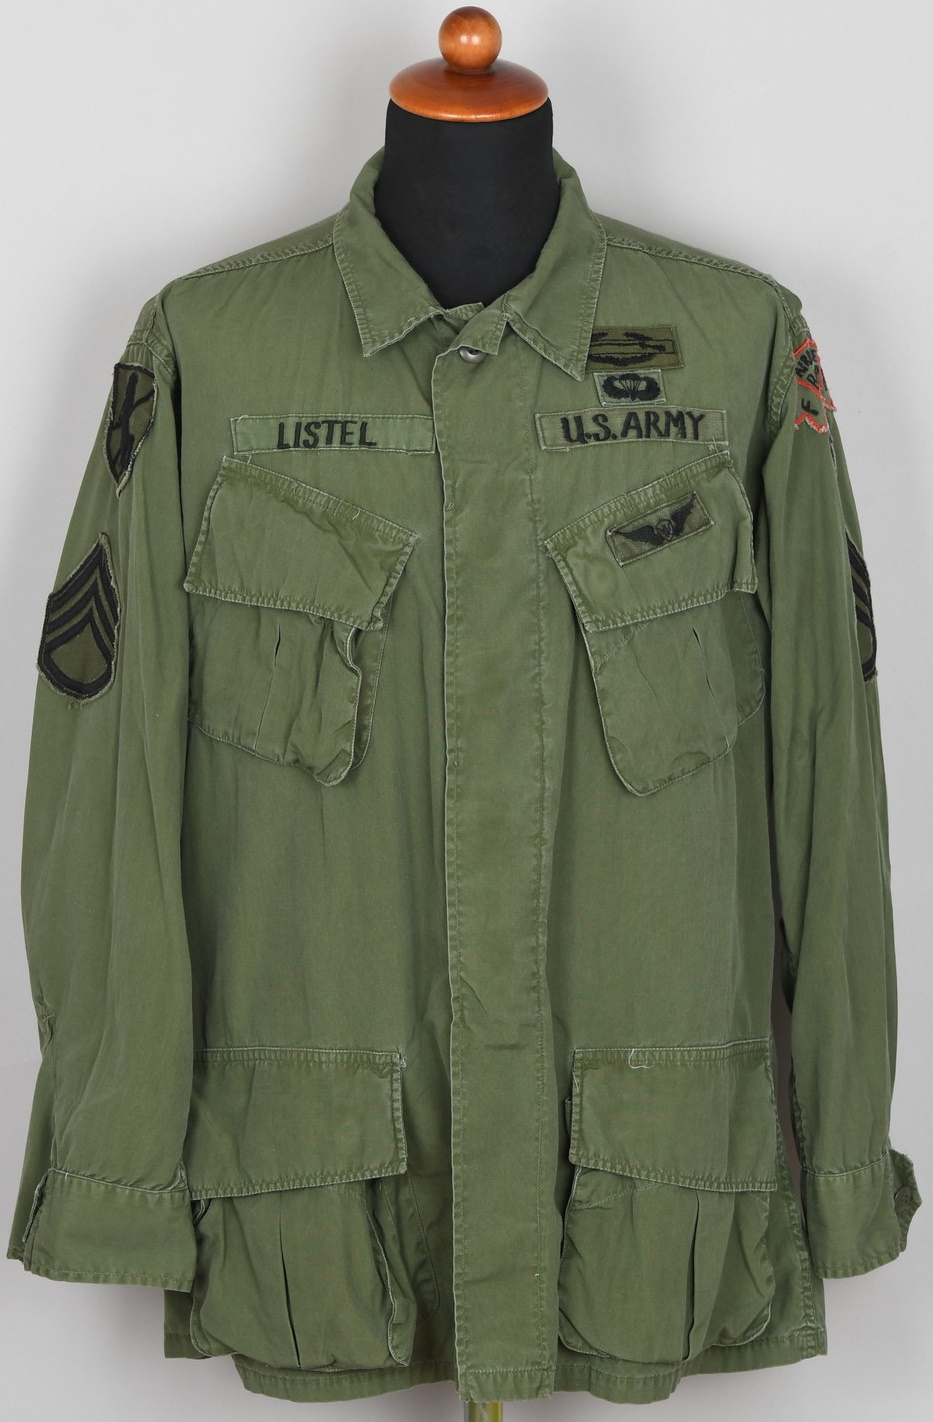 U.S Army Vietnam War Staff Sergeant 75th Airborna Ranger Listel'